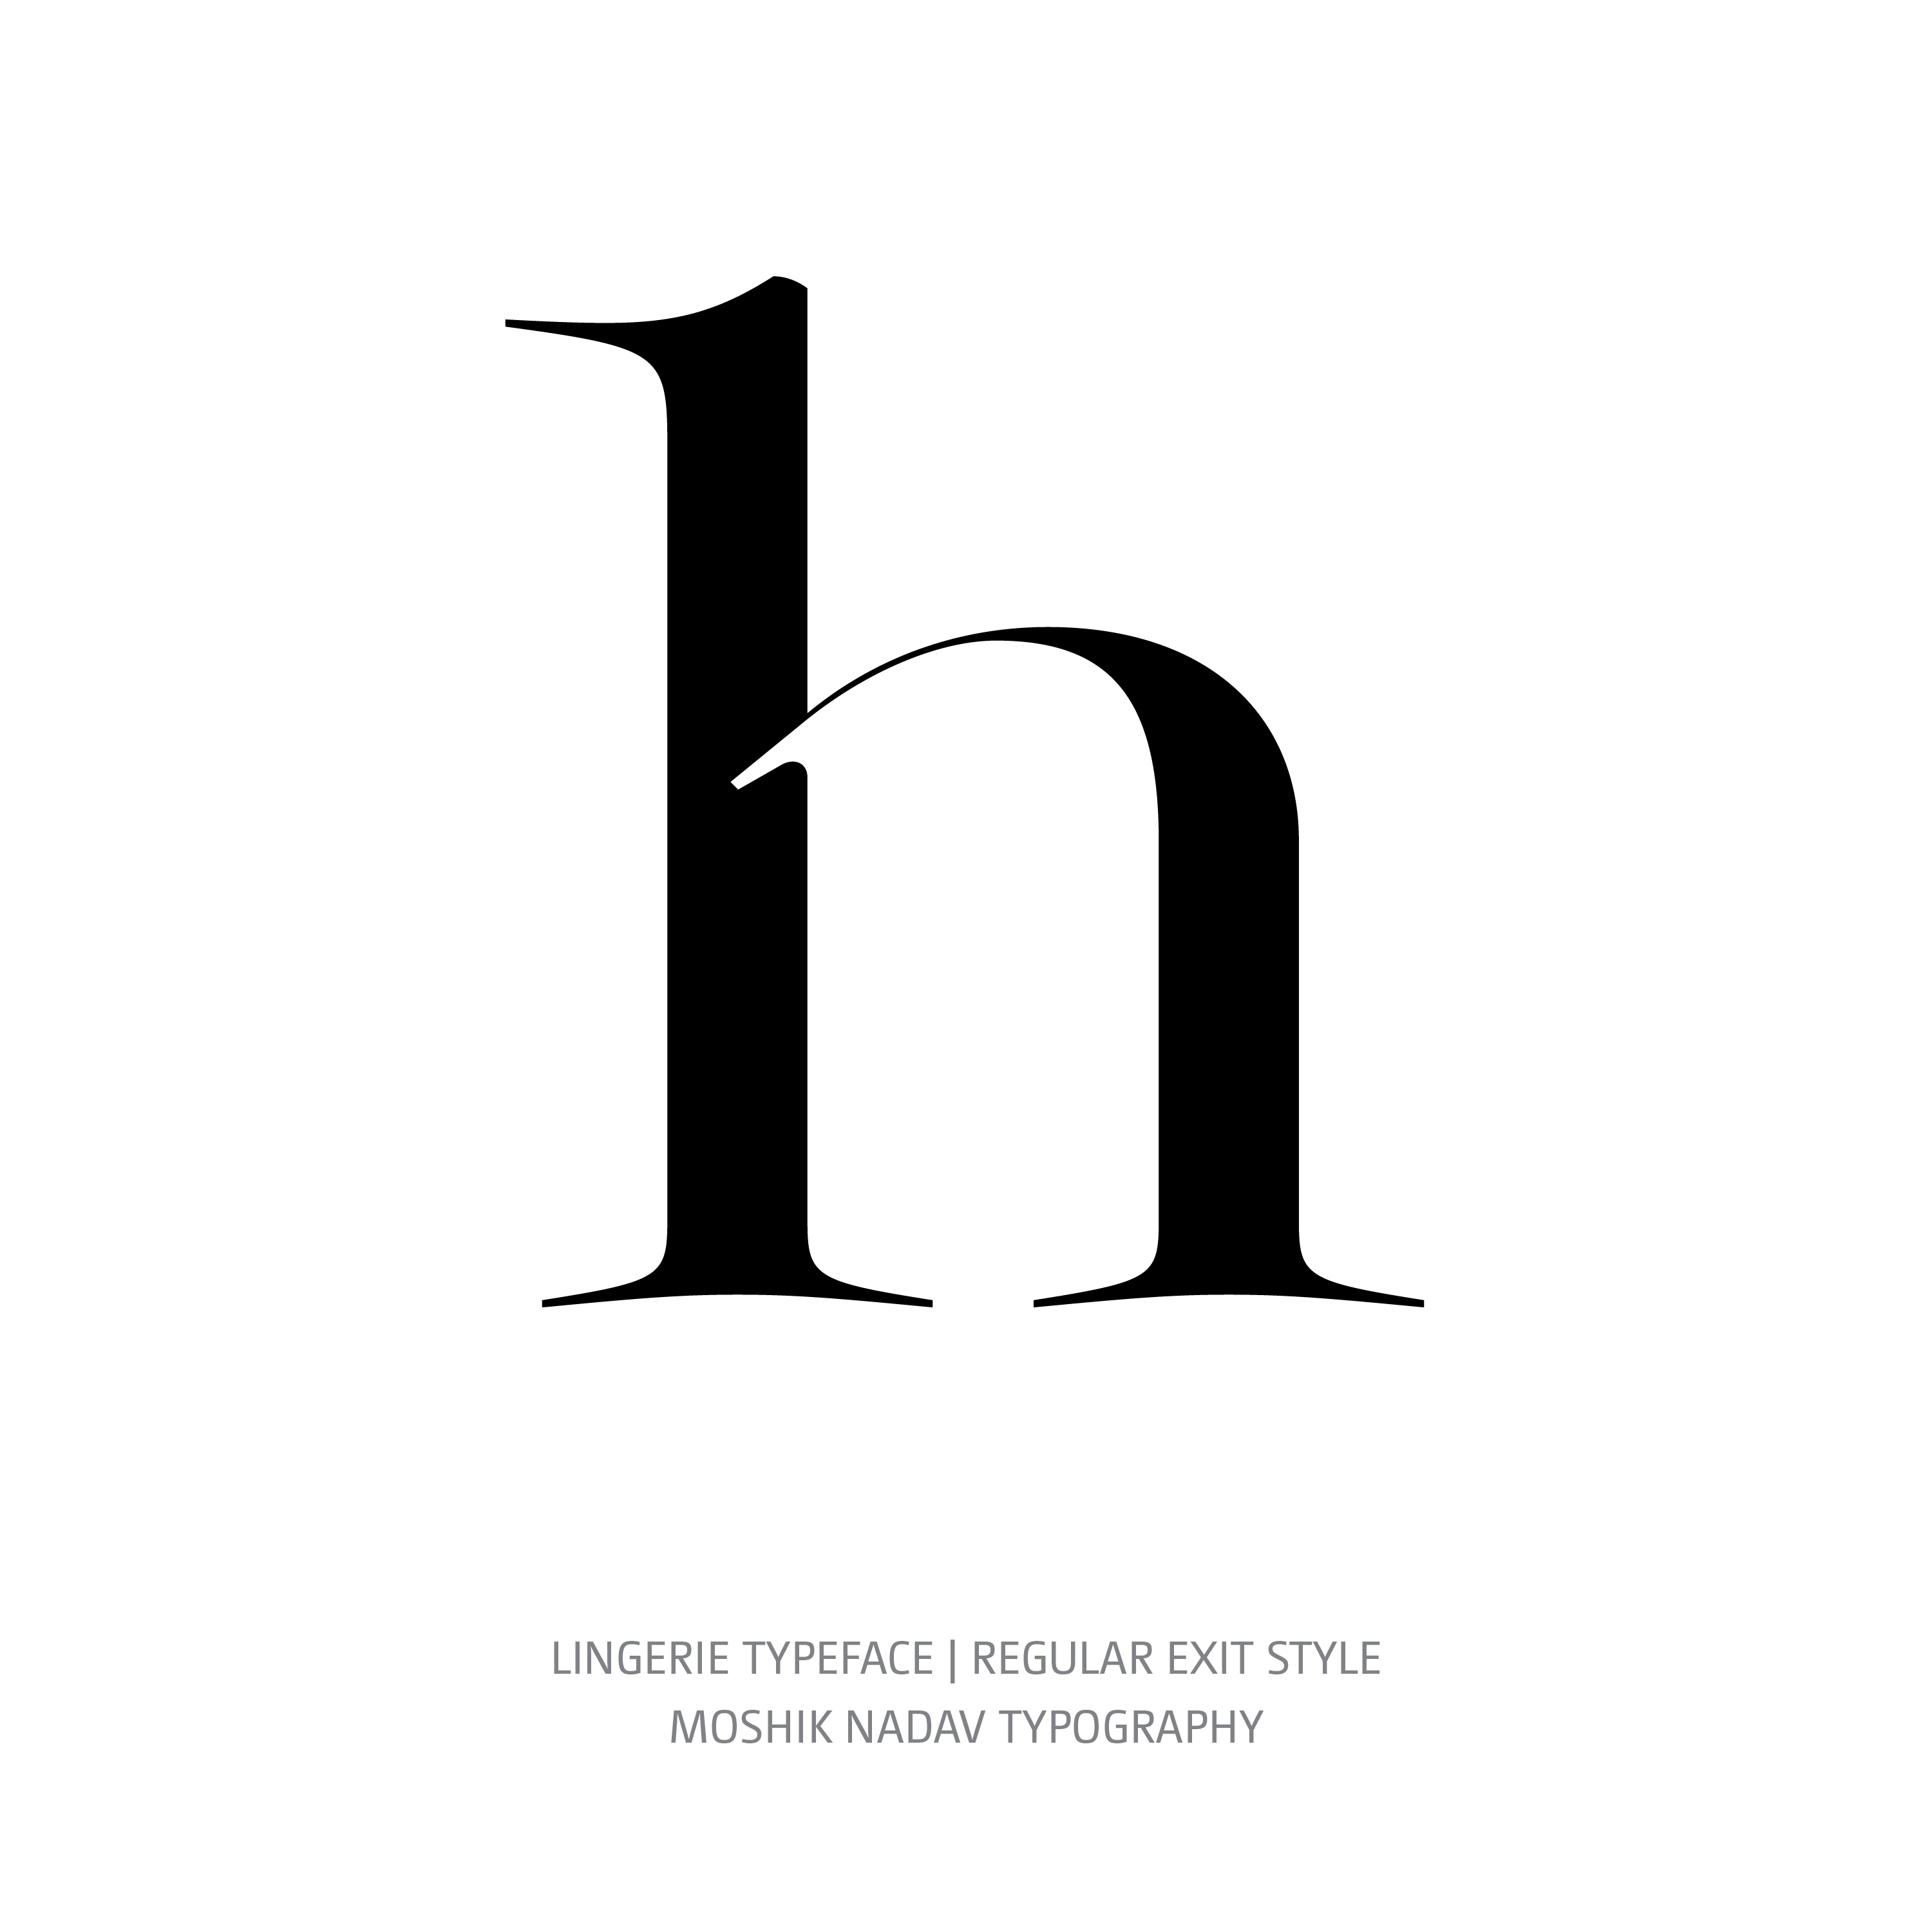 Lingerie Typeface Regular Exit h